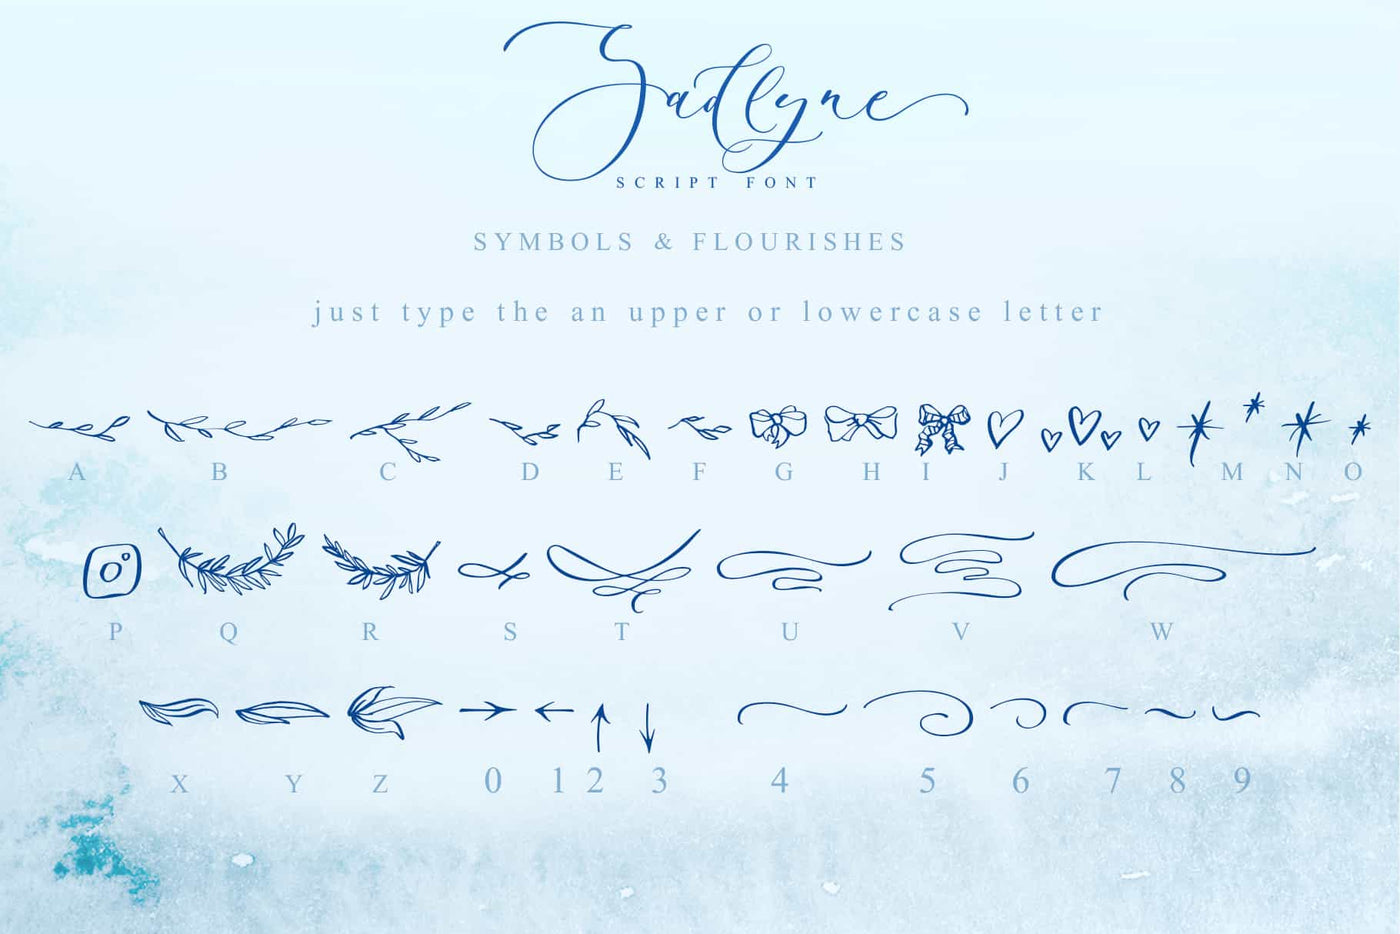 The Stylish Calligraphy Font Bundle - 12 Exclusive Fonts - Artixty